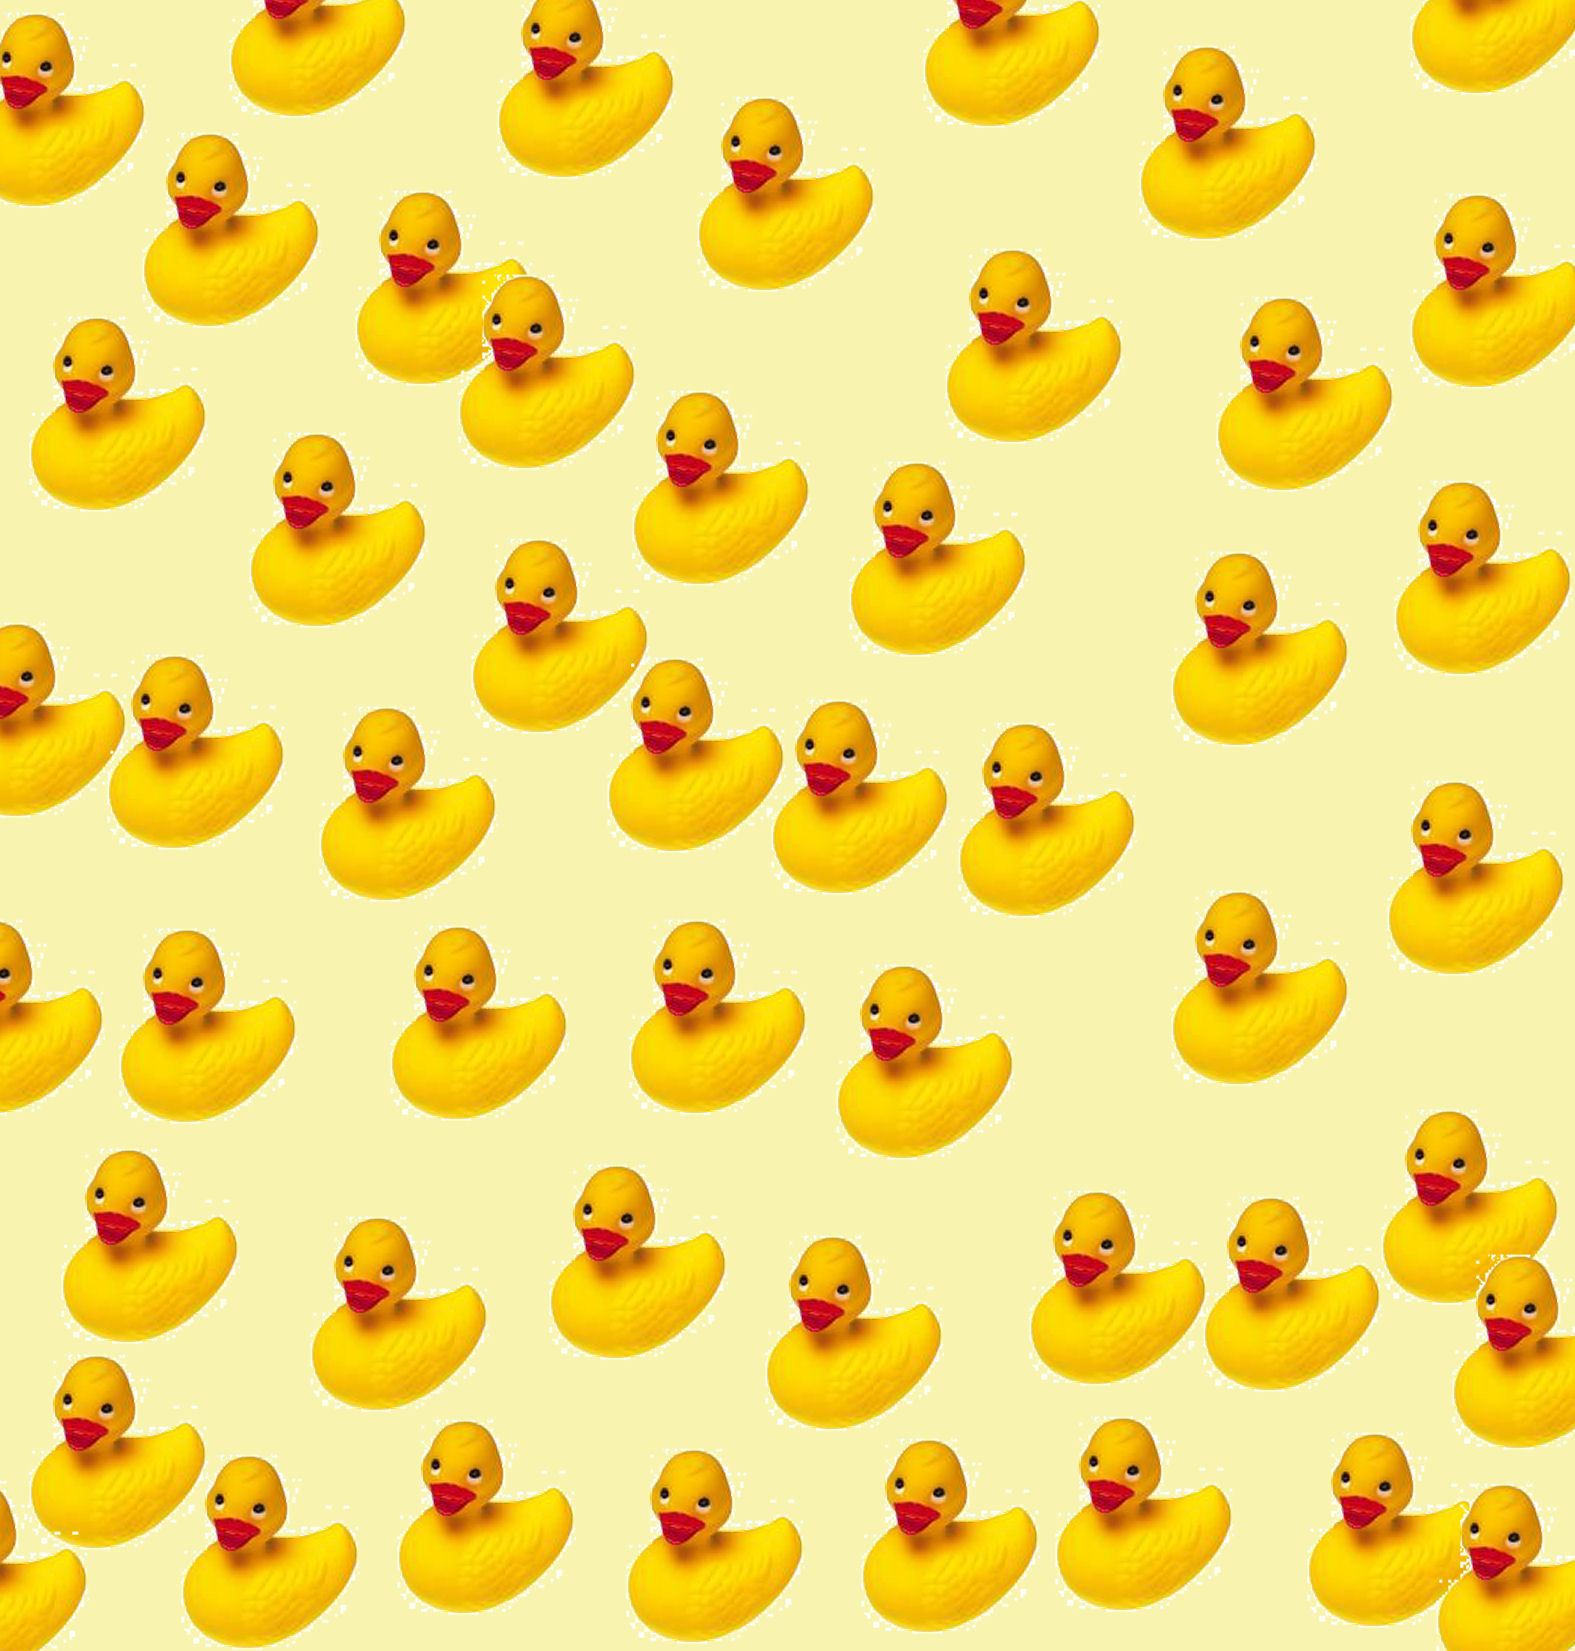 Rubber Duckie Puter Wallpaper